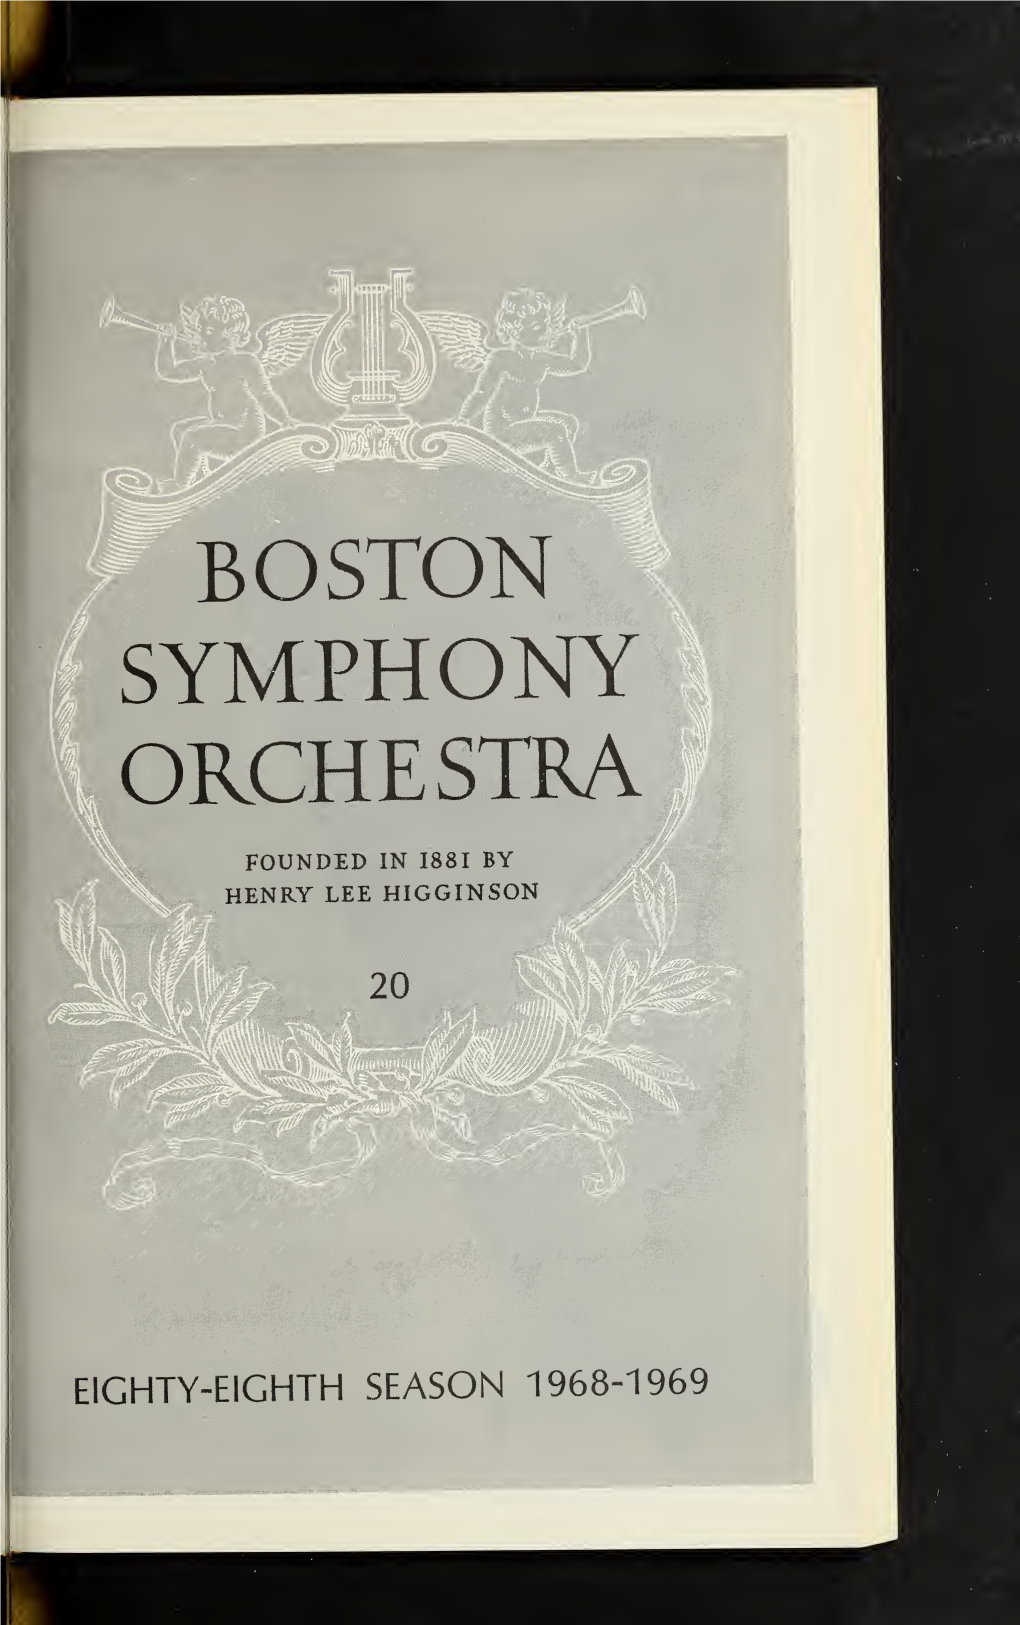 Boston Symphony Orchestra Concert Programs, Season 88, 1968-1969